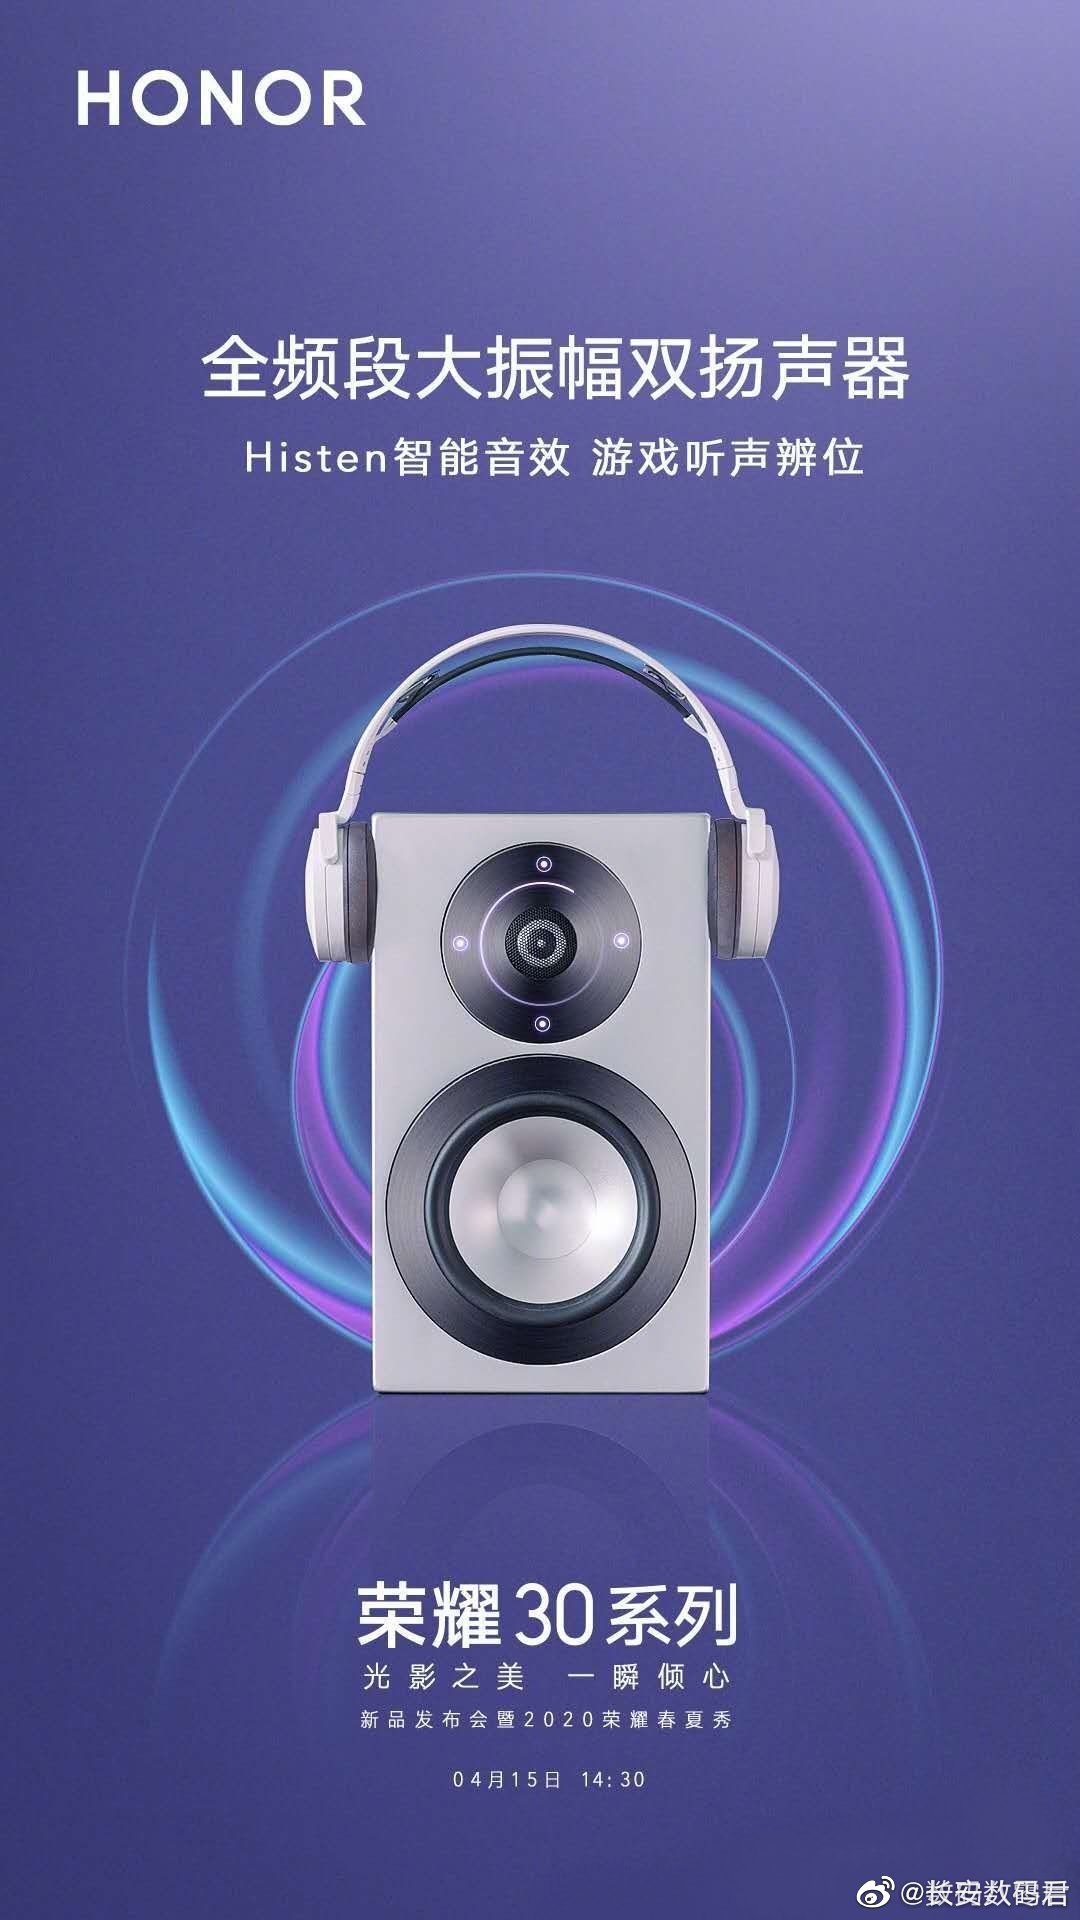 Huawei Histen sound effects